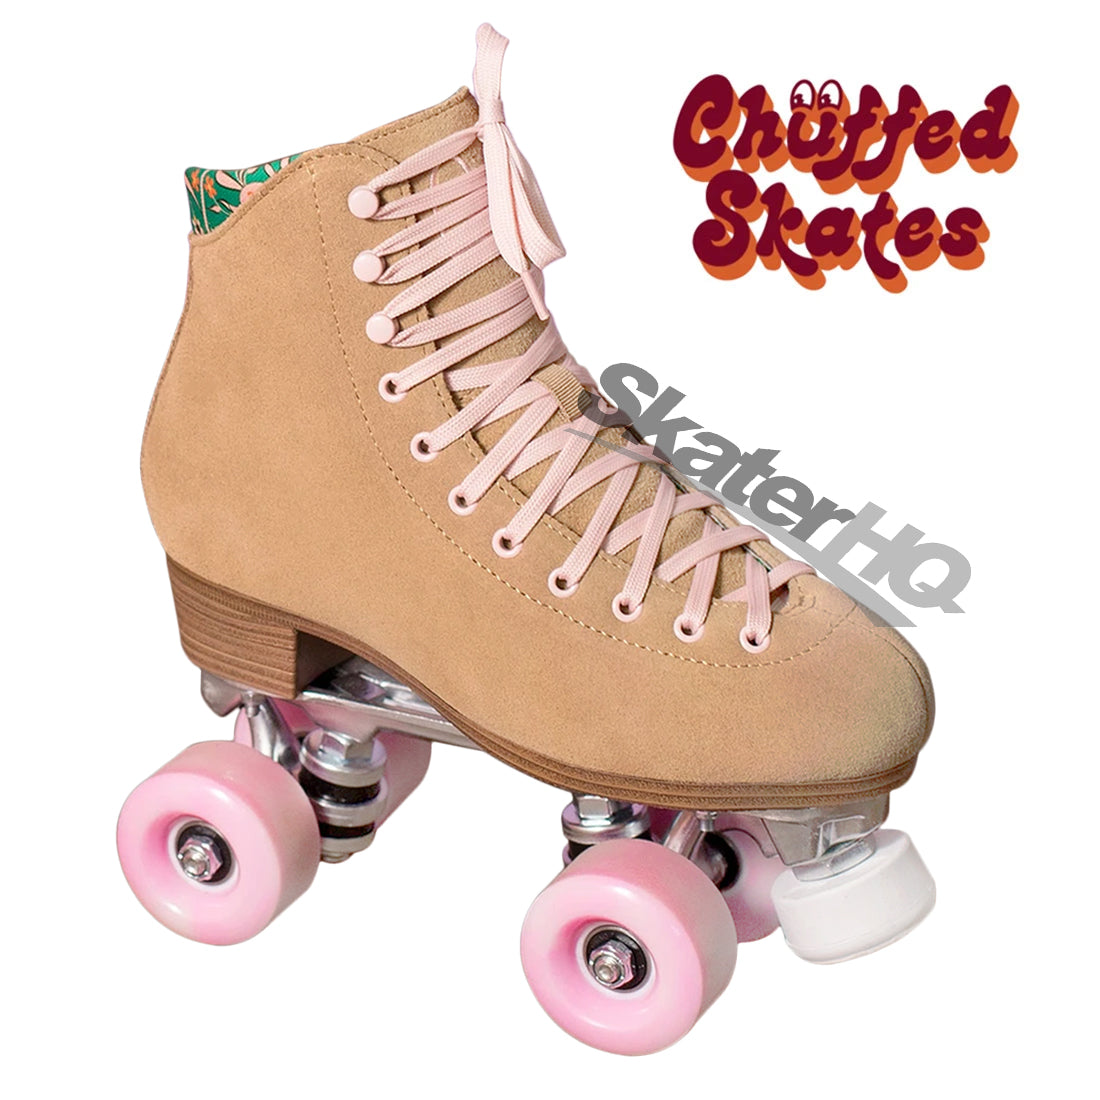 Chuffed Crew Iced Coffee 10US Roller Skates